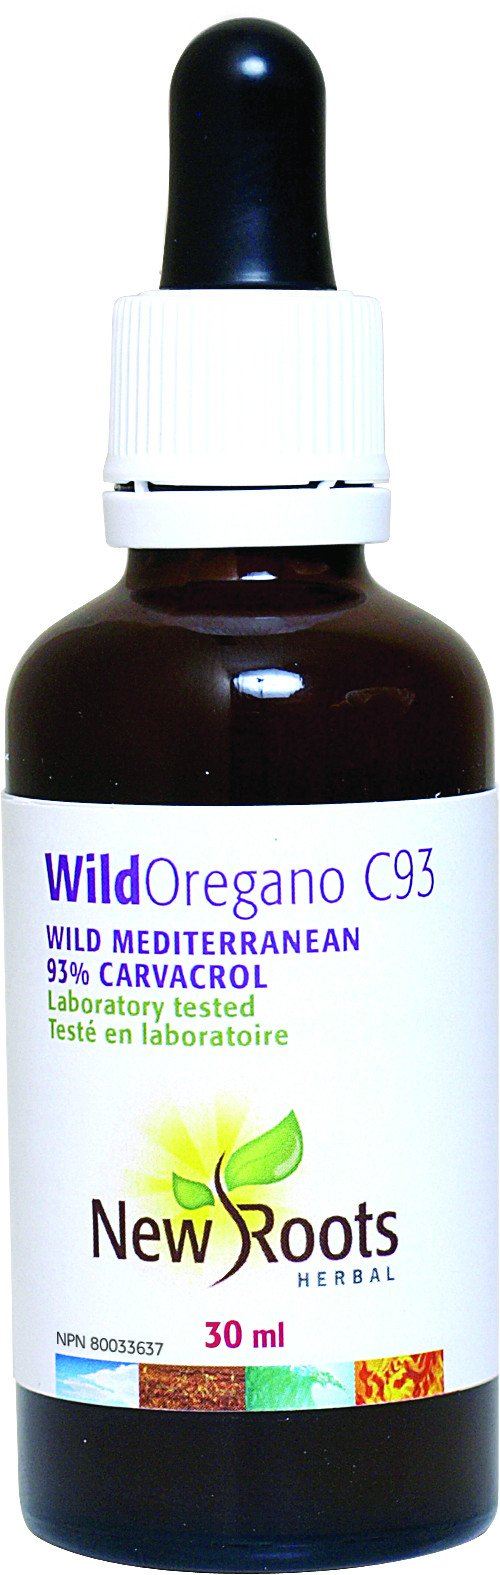 New Roots Herbal - Wild Oregano C93 -30ml